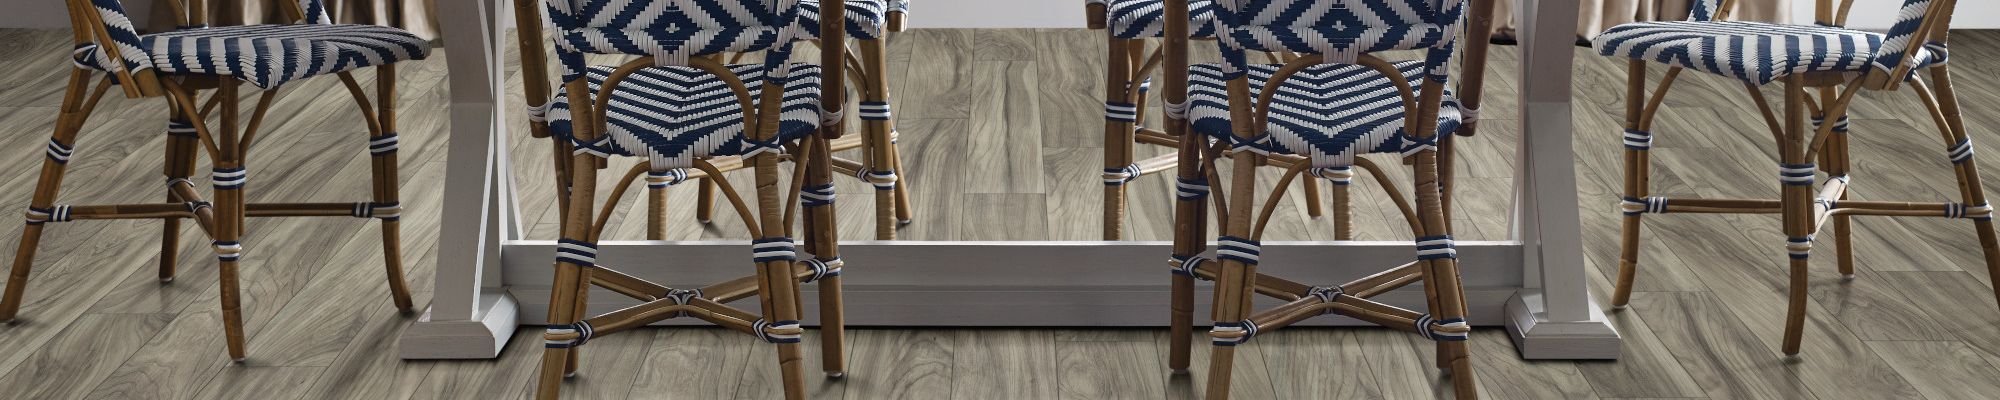 Dining room with Repel Laminate flooring - Wood-look laminate flooring from Carpet Innovations in Denver, CO